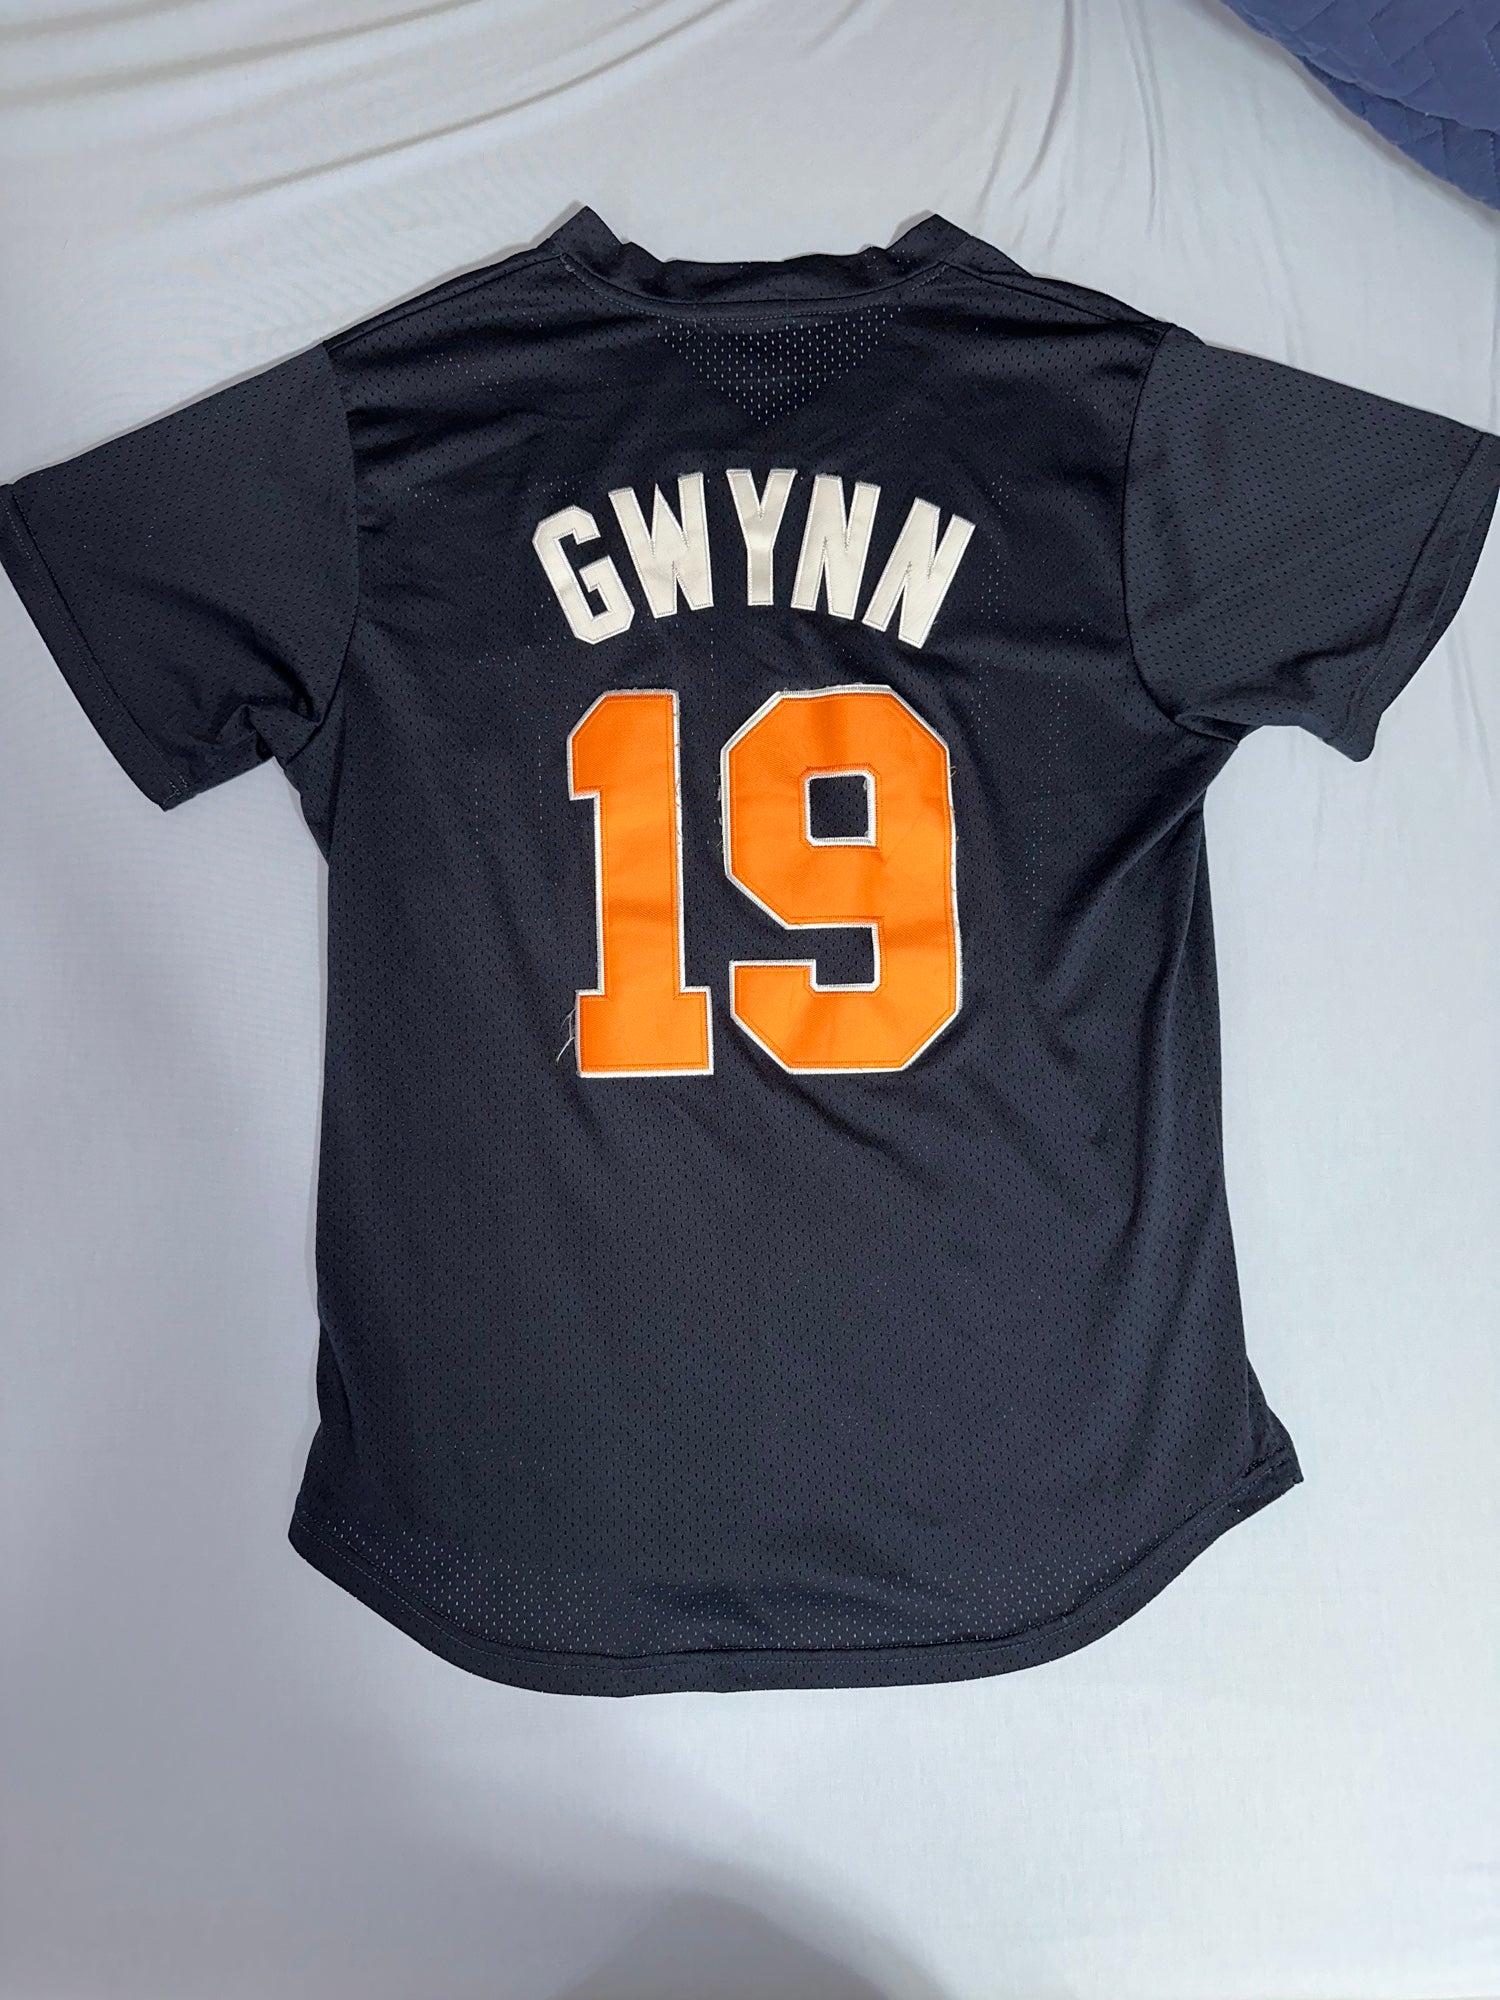 tony gwynn batting practice jersey